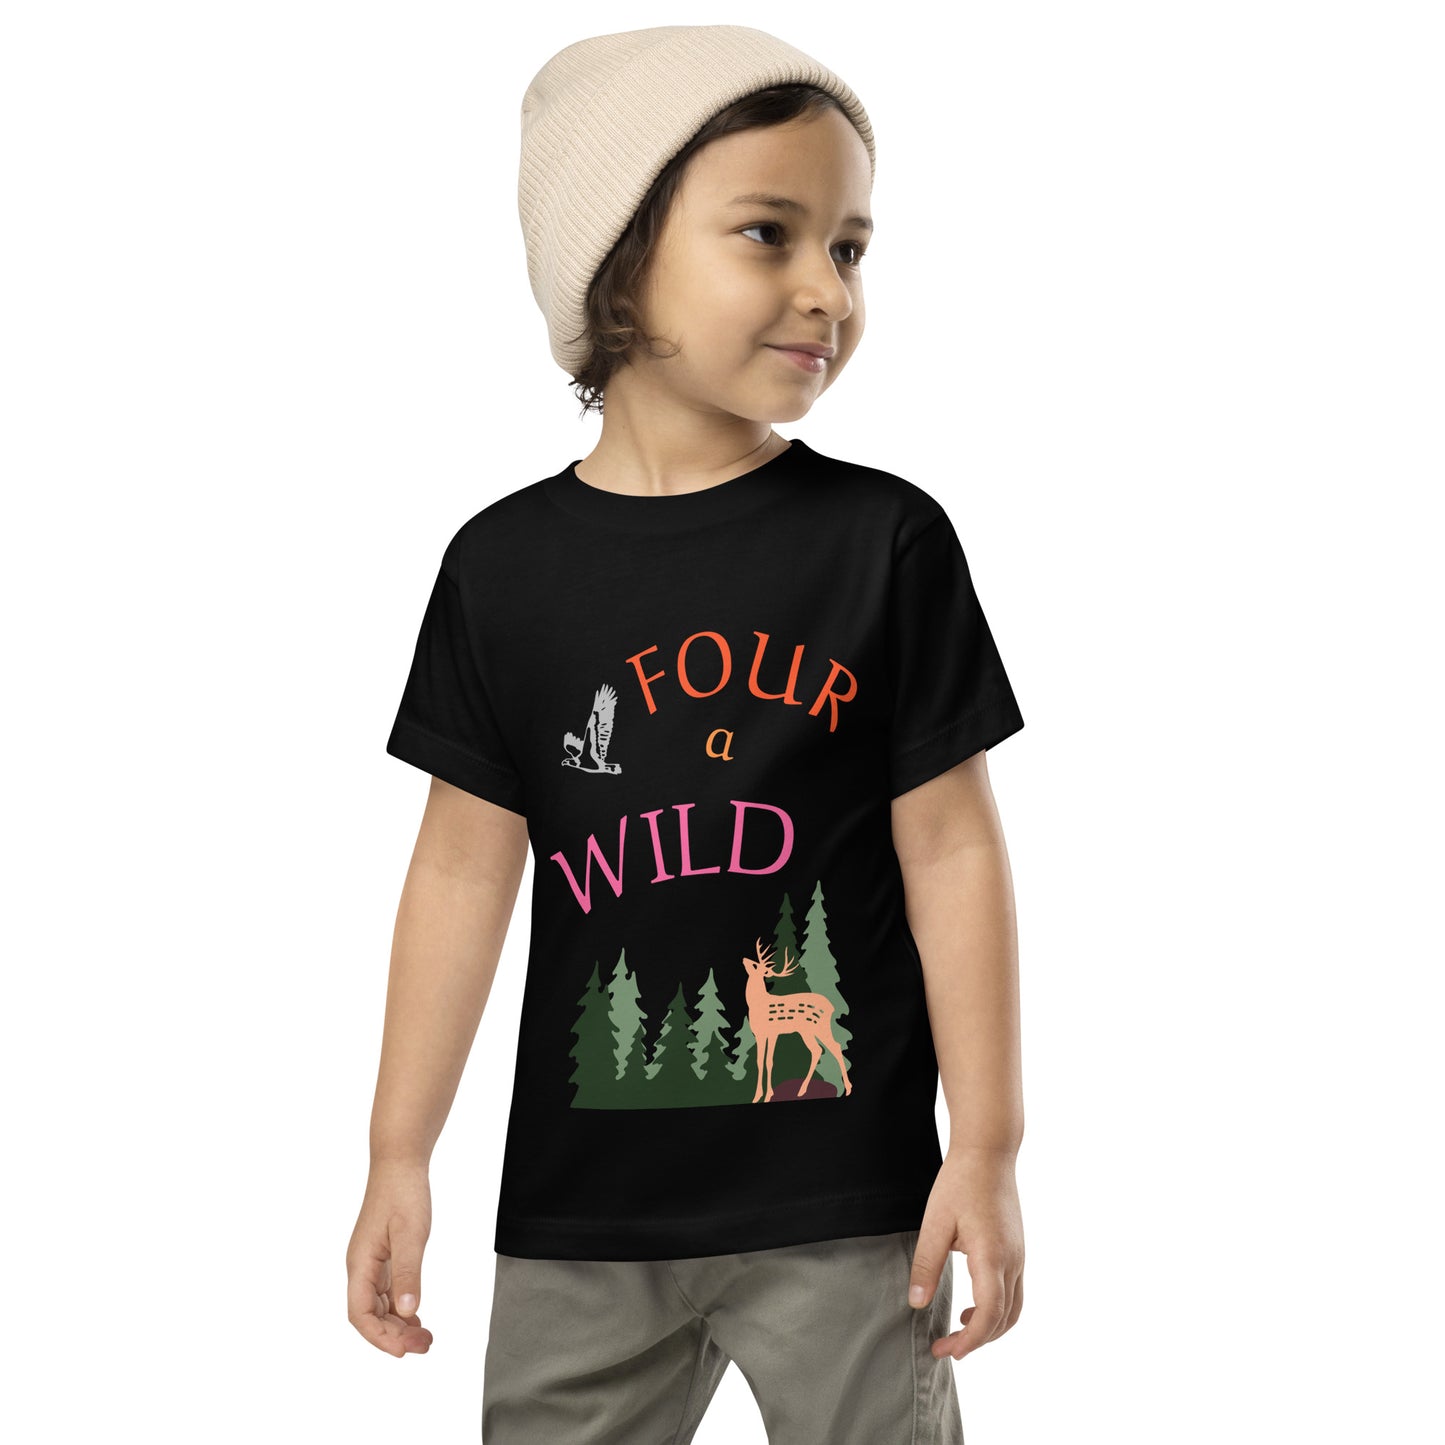 Toddler Short Sleeve Tee - Four a Wild